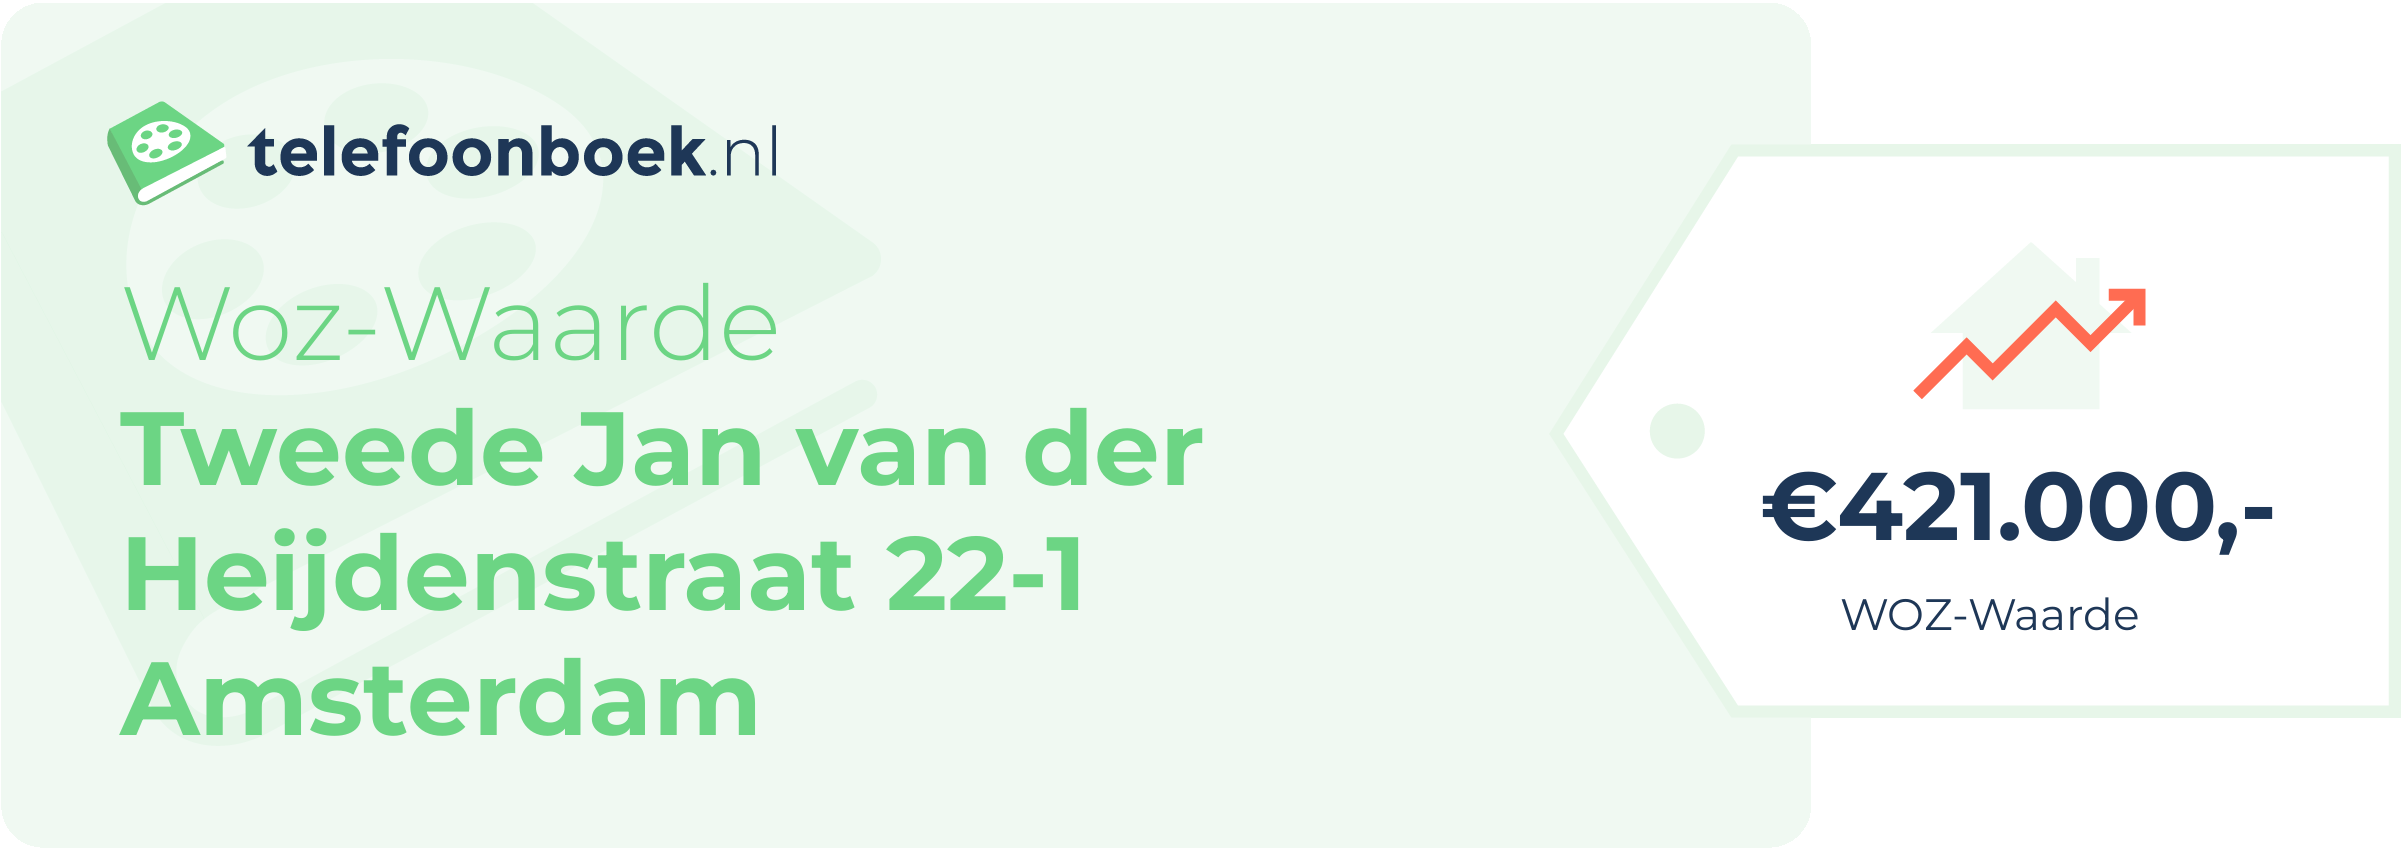 WOZ-waarde Tweede Jan Van Der Heijdenstraat 22-1 Amsterdam